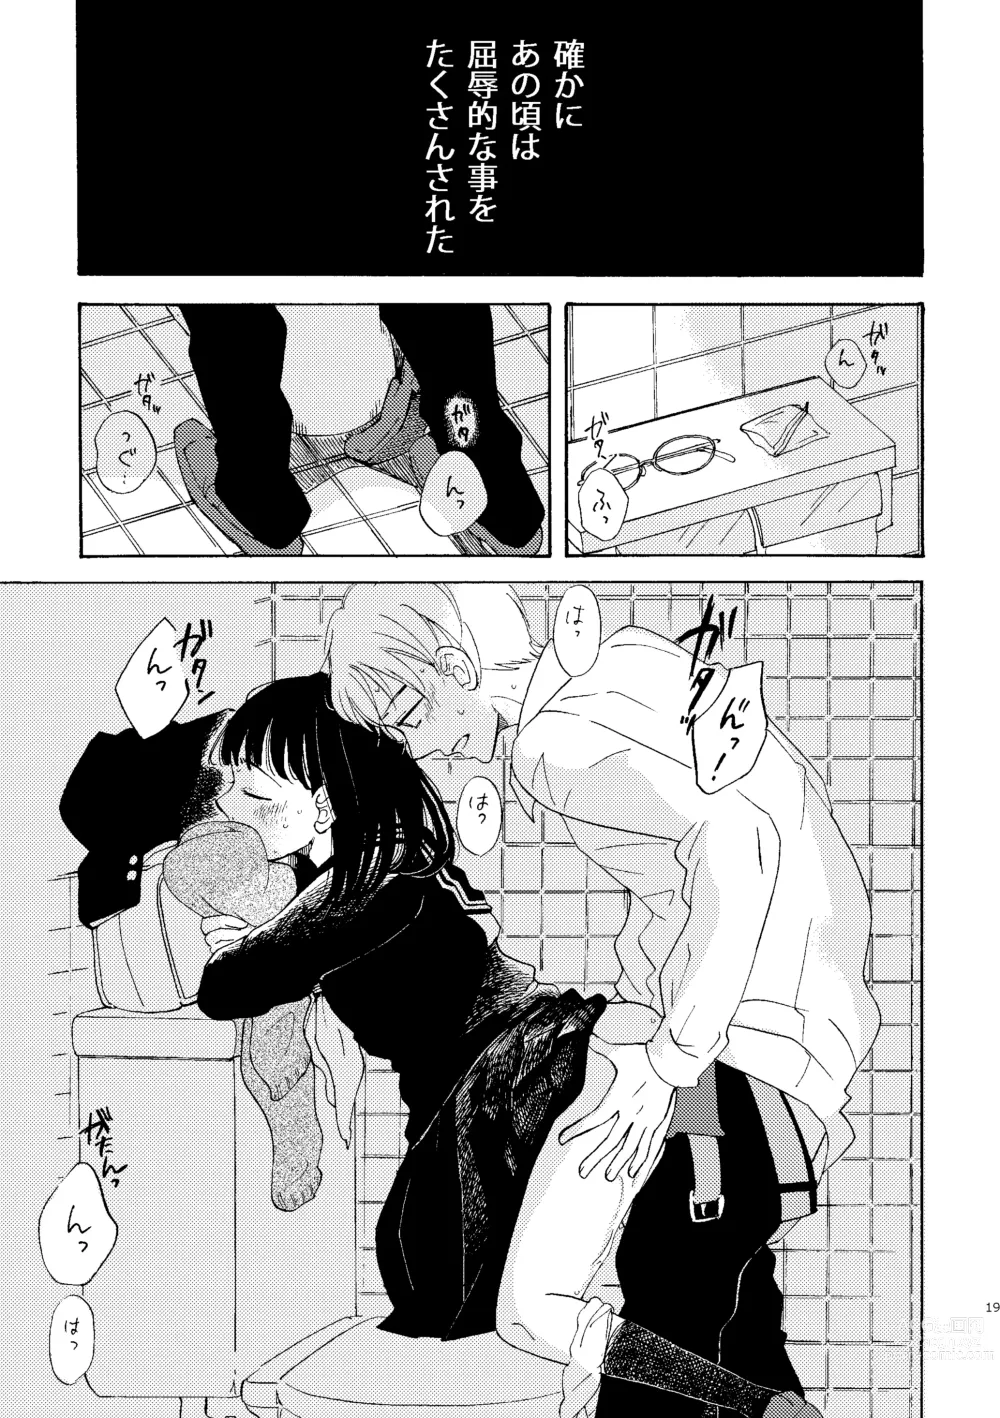 Page 19 of doujinshi Ibitsu na Junjou